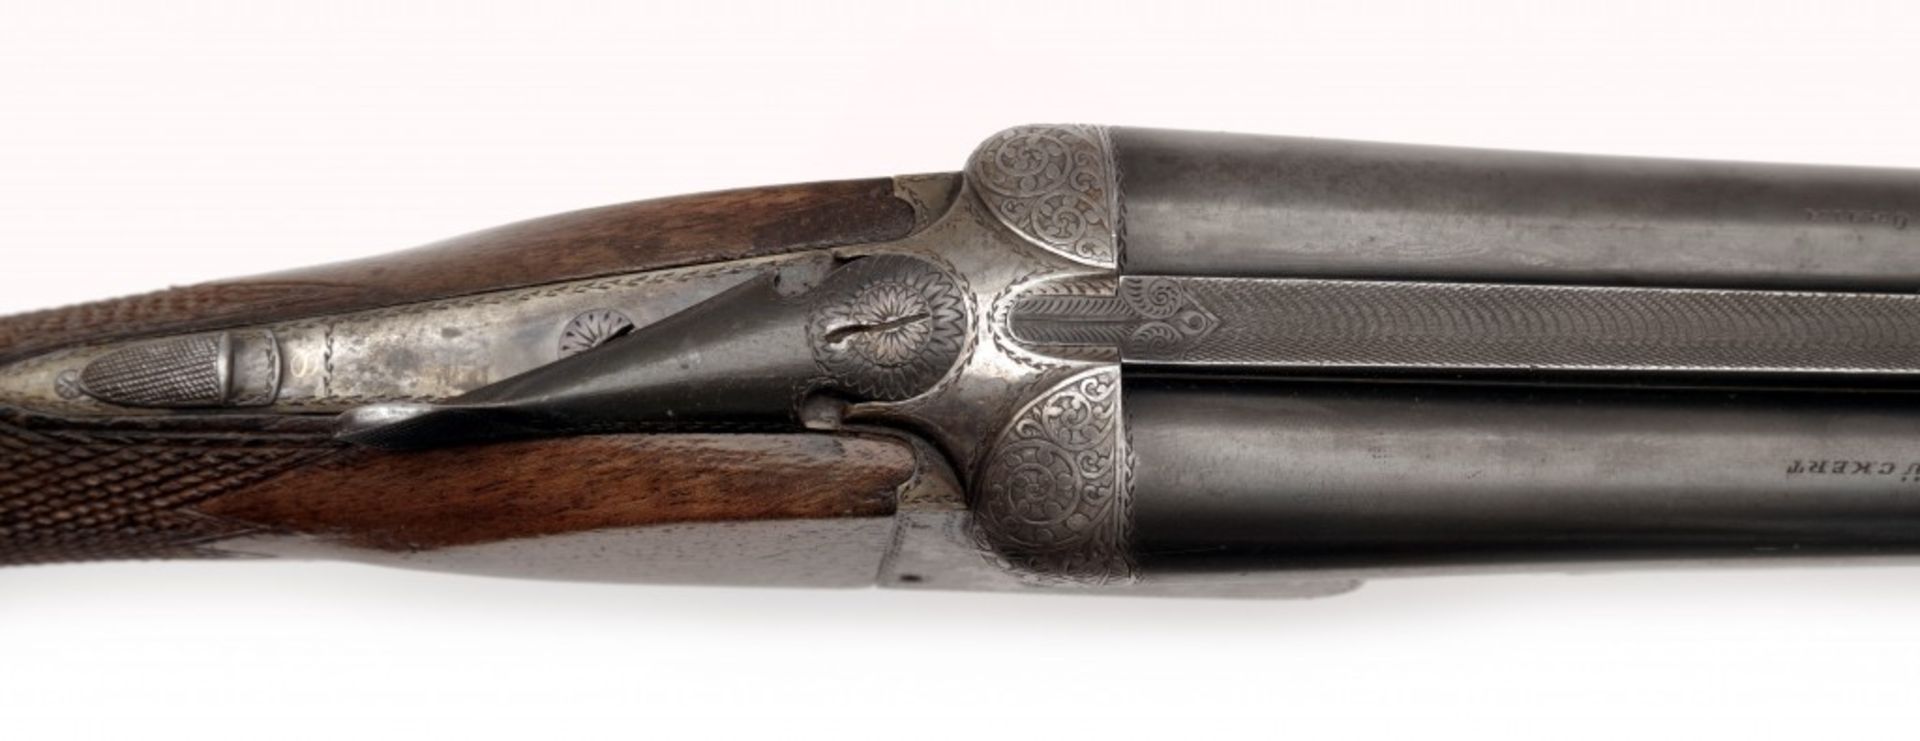 A Double-barrelled Shotgun, Ferdinand Fückert, Troppau (Opava) - Image 4 of 6